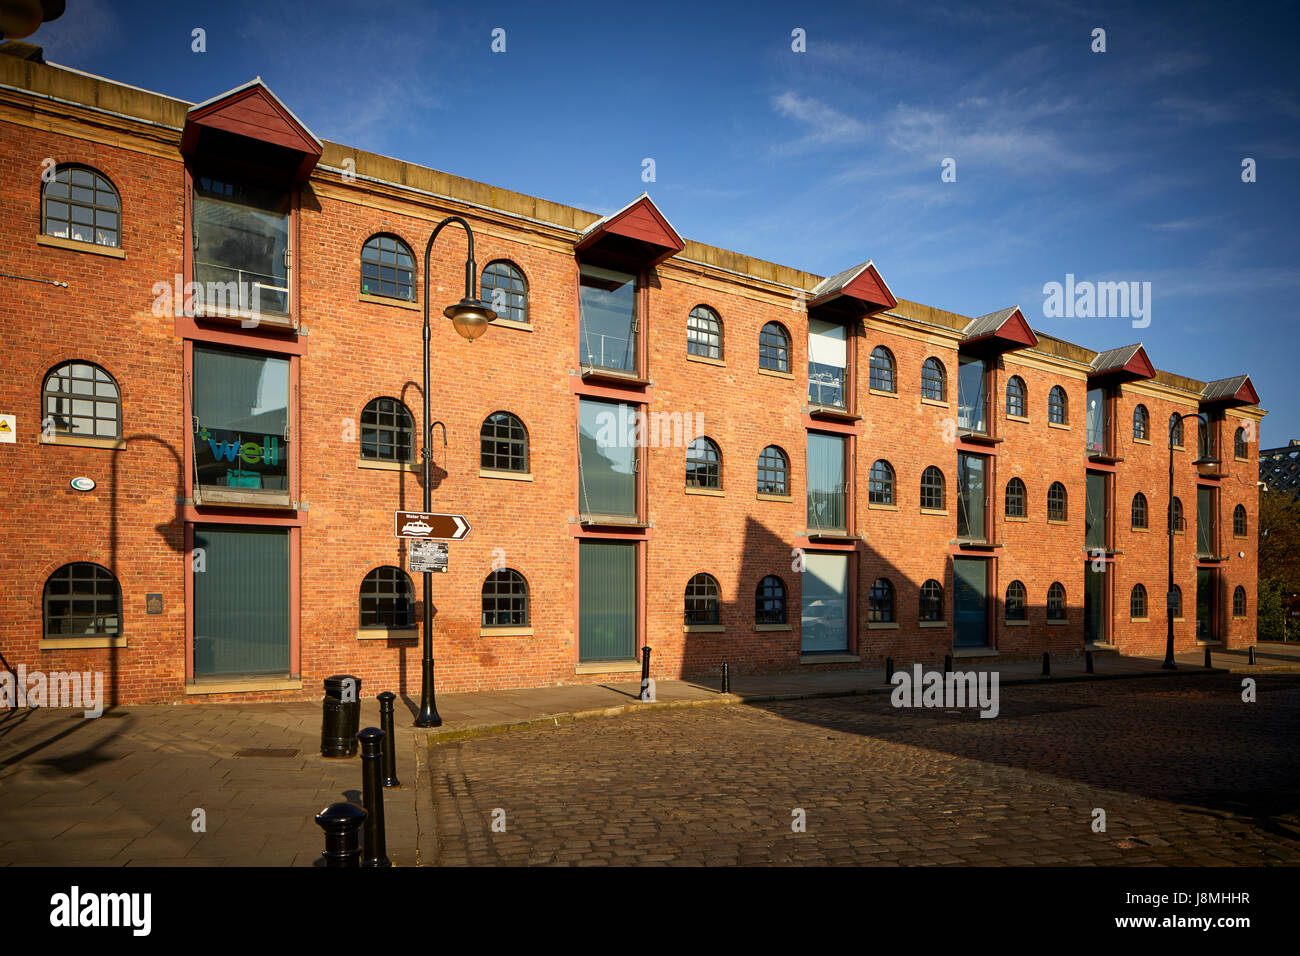 Manchester castlefield basin, and modern urban housing development, Stock Photo